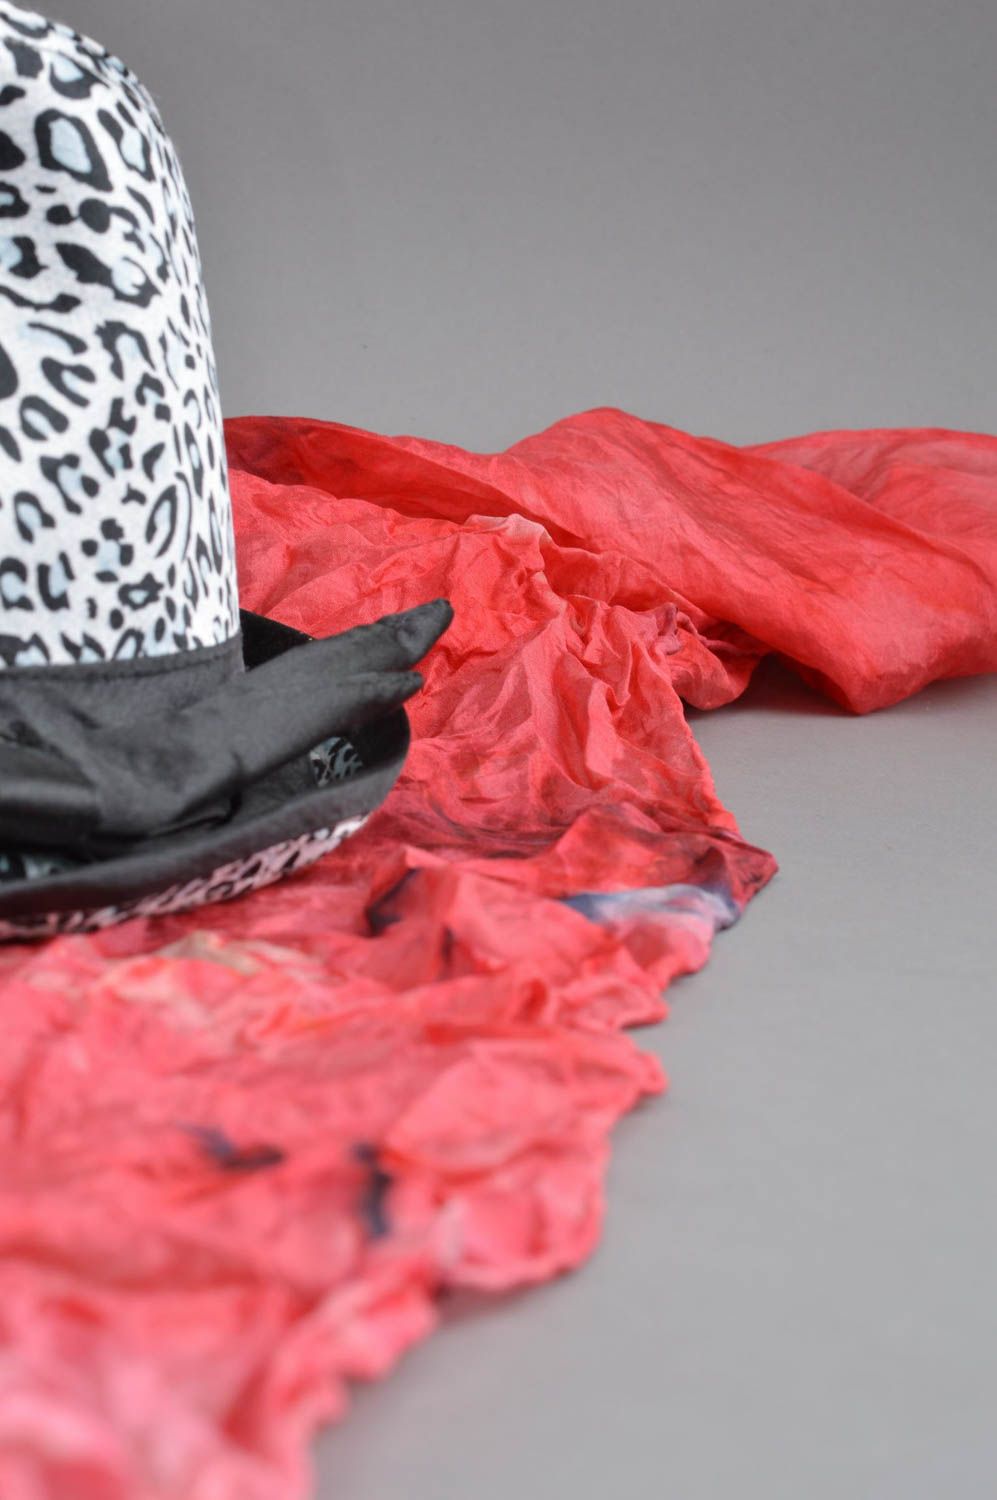 Handmade silk shawl designer red scarf unusual stylish accessory gift photo 2